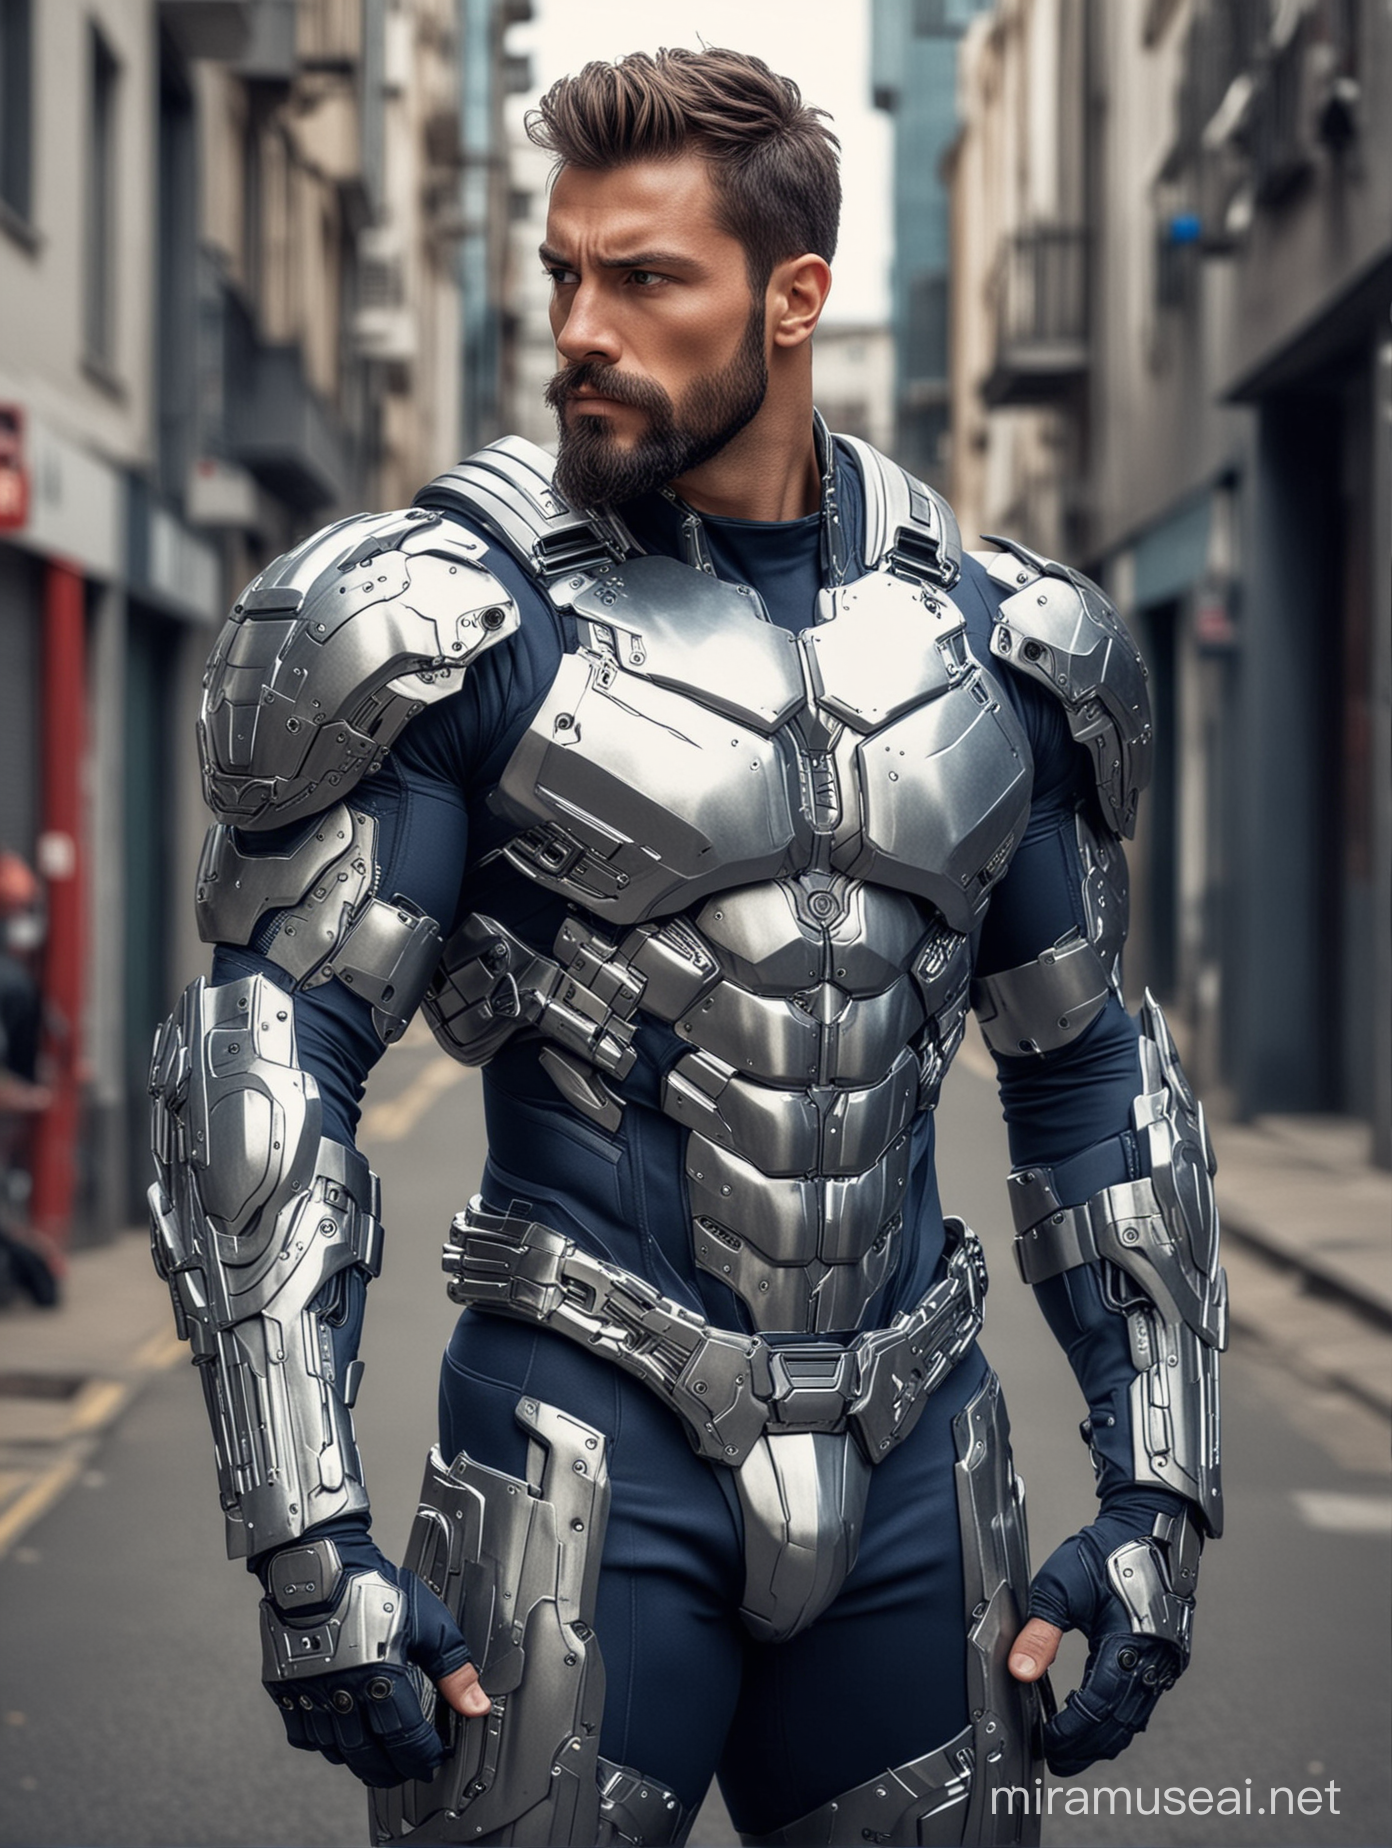 SciFi Bodybuilder Men in HighTech Armor Suit with Firearms on Street